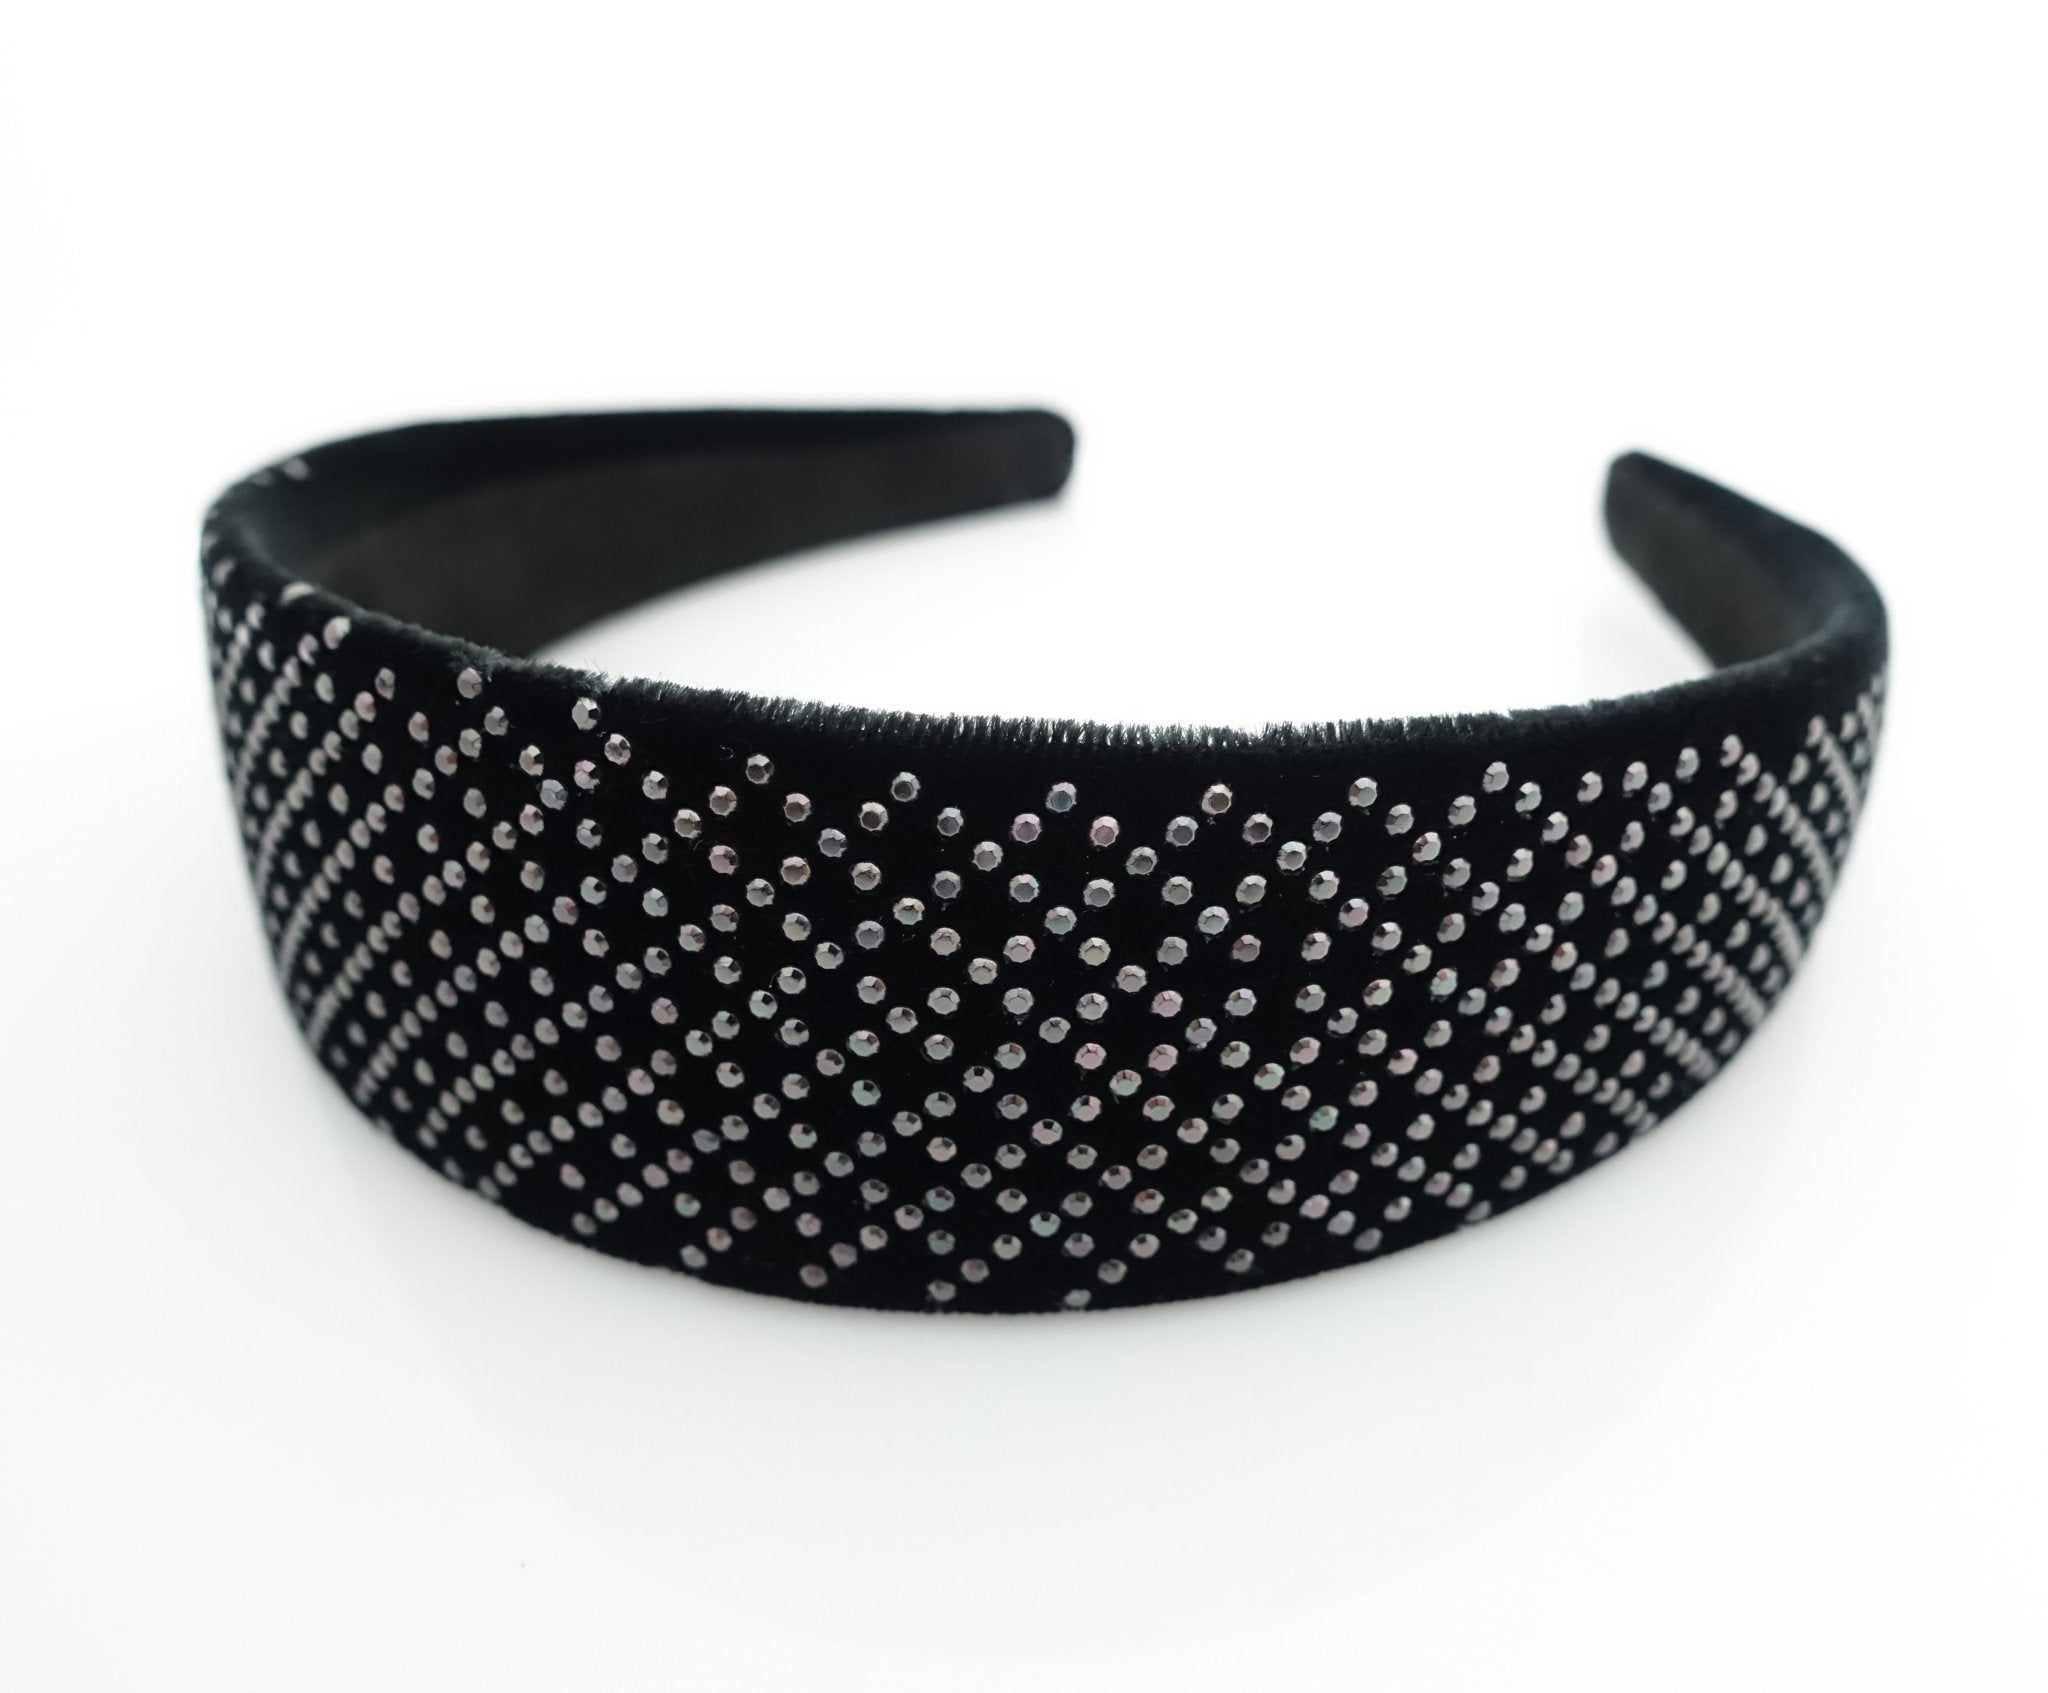 veryshine.com hairband/headband Black diamond black velvet diamond grid headband dazzling fashion women fashion hairband